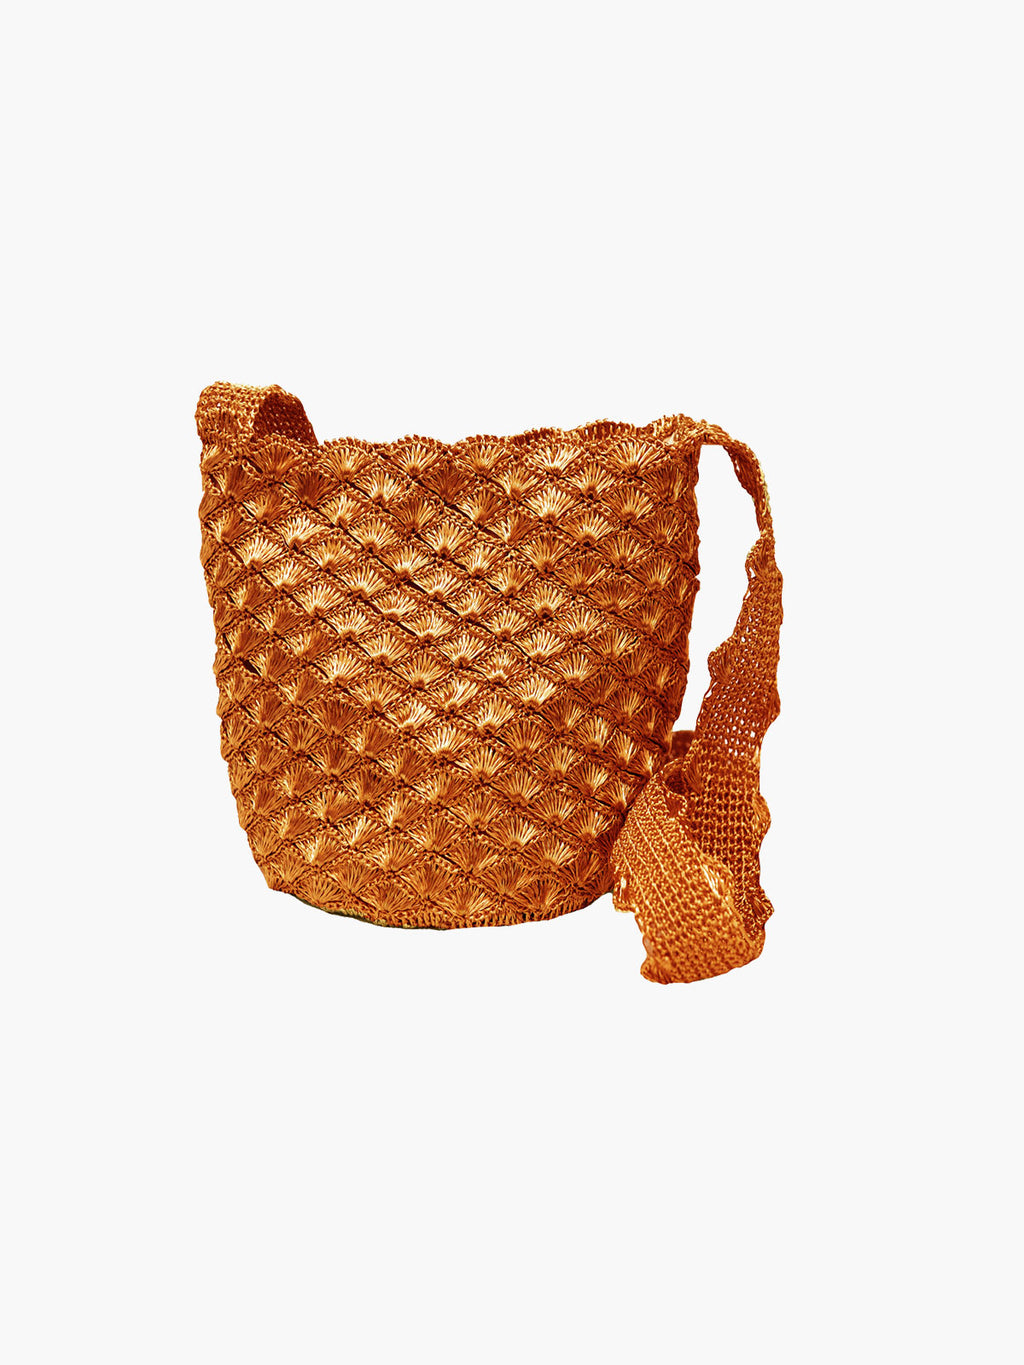 Seashell Weave Mochila | Copper - Fashionkind